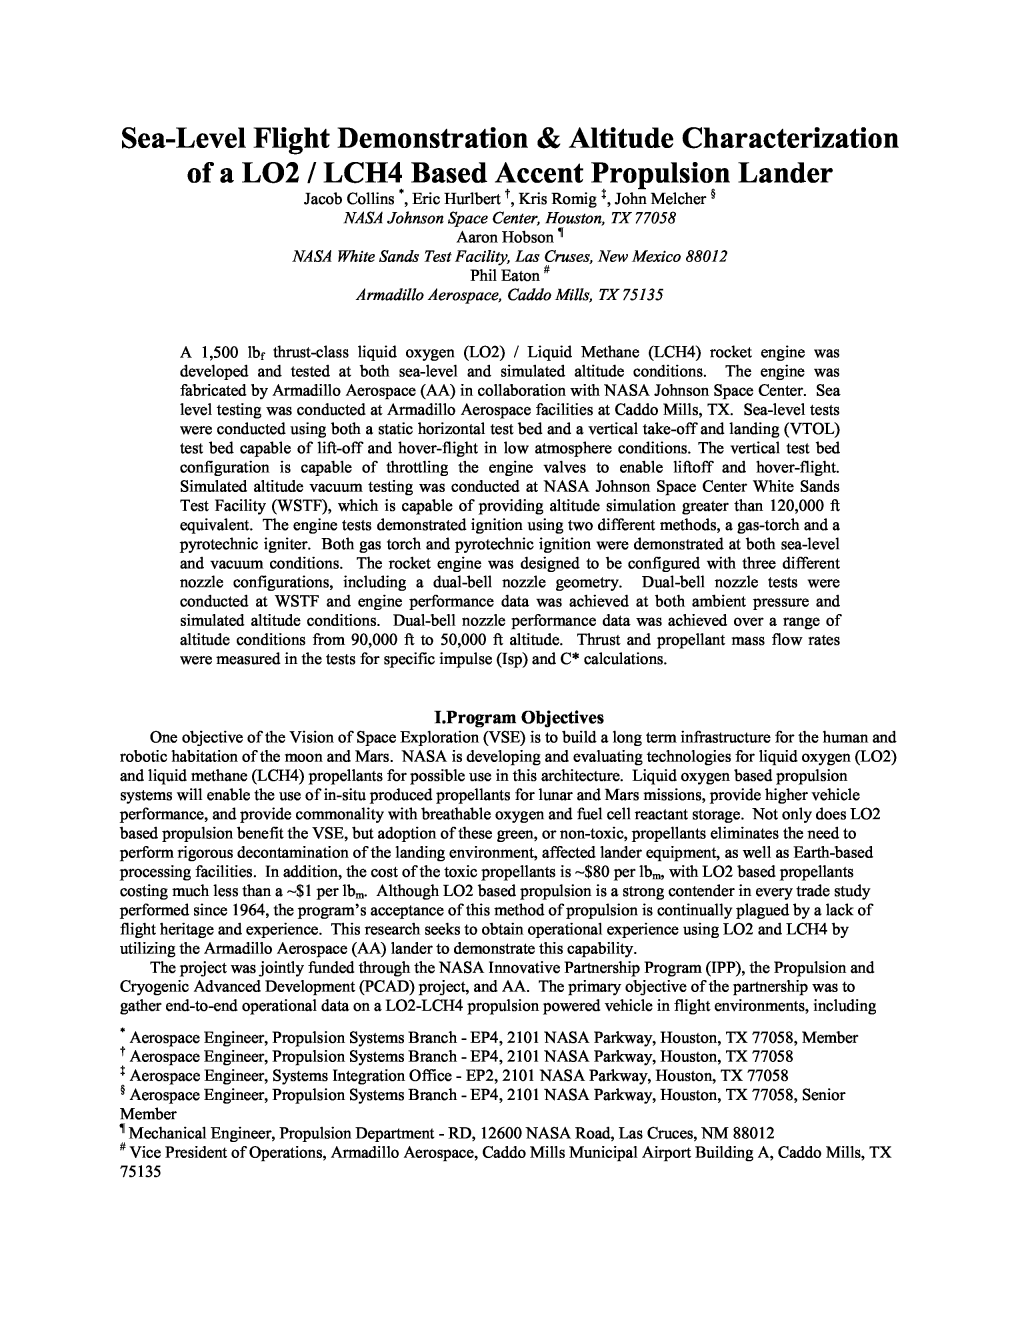 Sea-Level Flight Demonstration & Altitude Characterization of a LO2